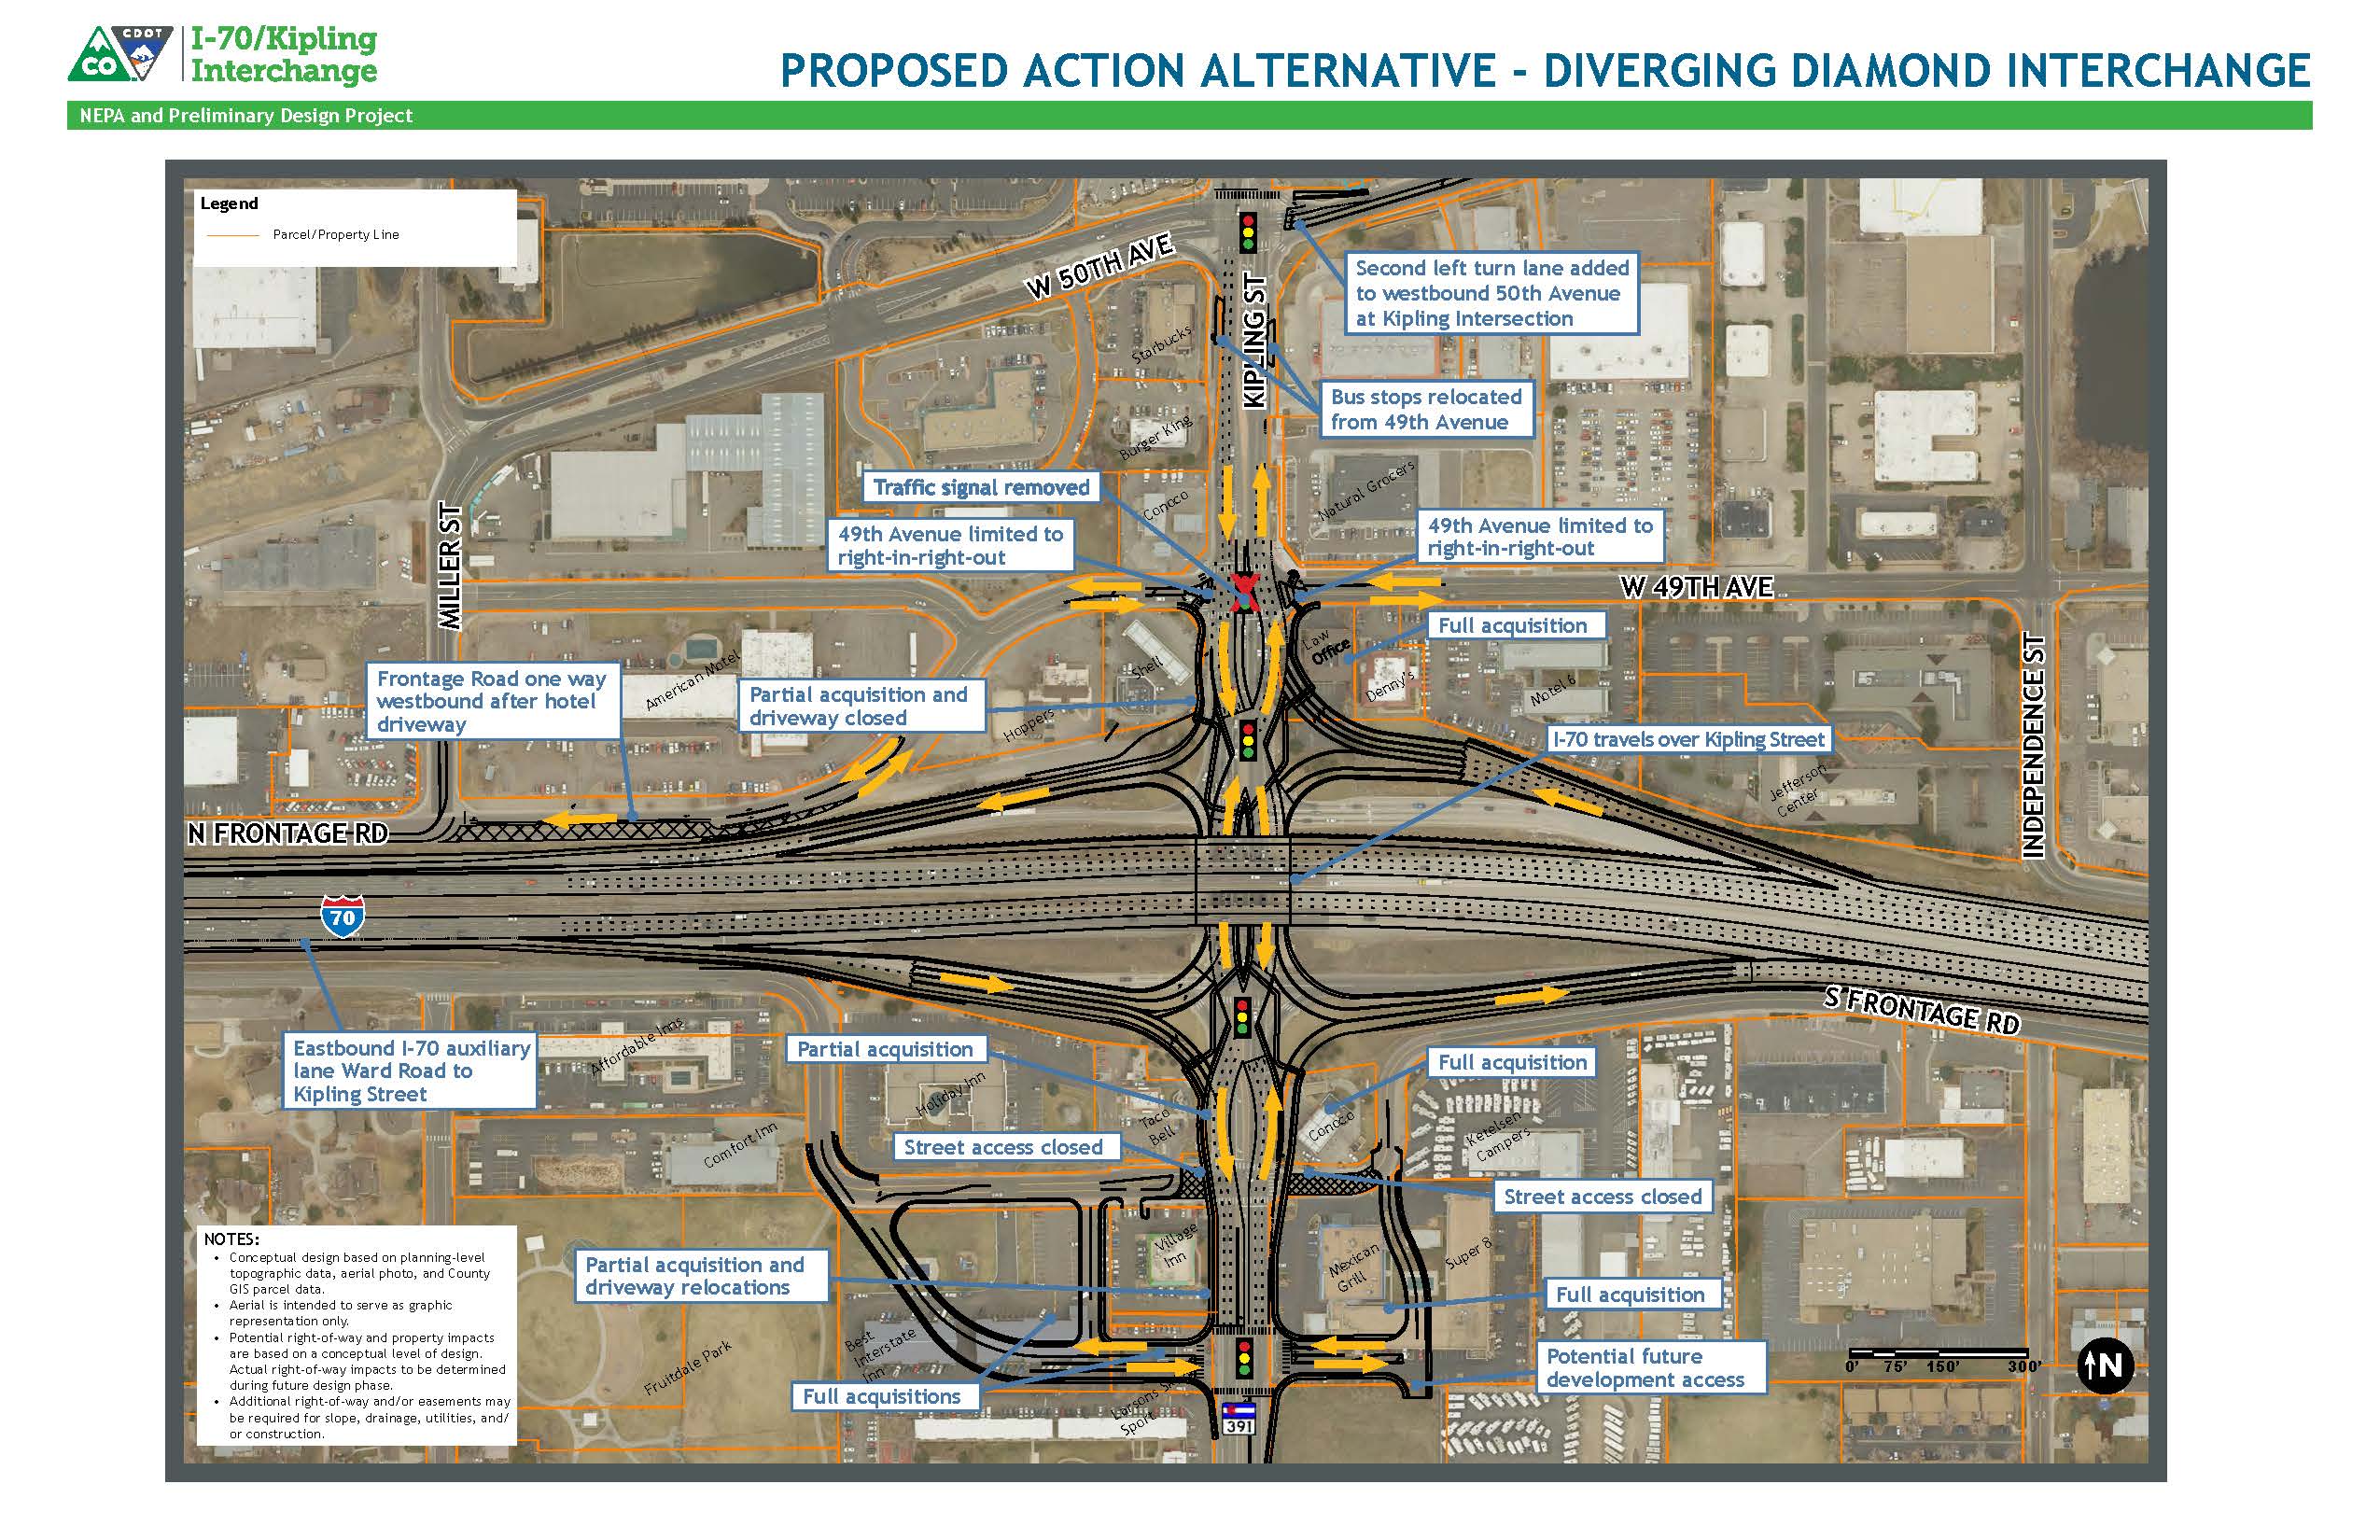 09_Proposed Action Alternative Diverging Diamond Interchange.jpg detail image